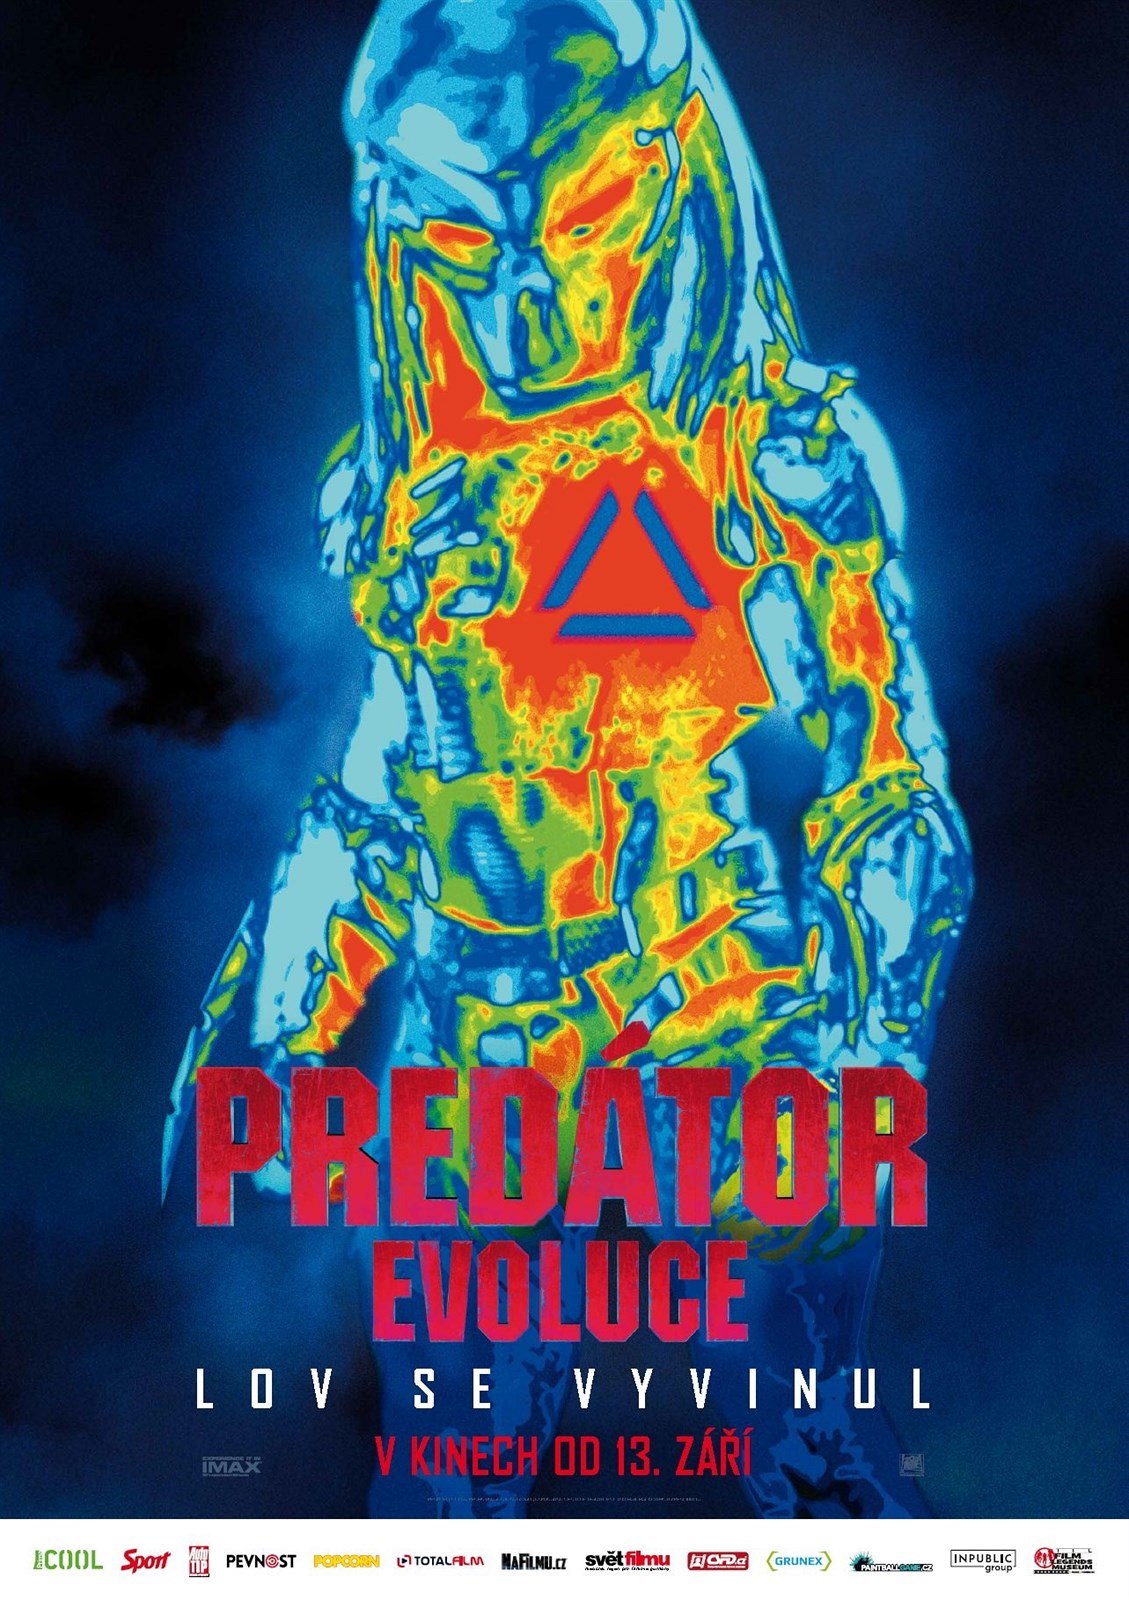 Stiahni si Filmy Kamera Predator: Evoluce / The Predator (2018)[CAM] = CSFD 58%